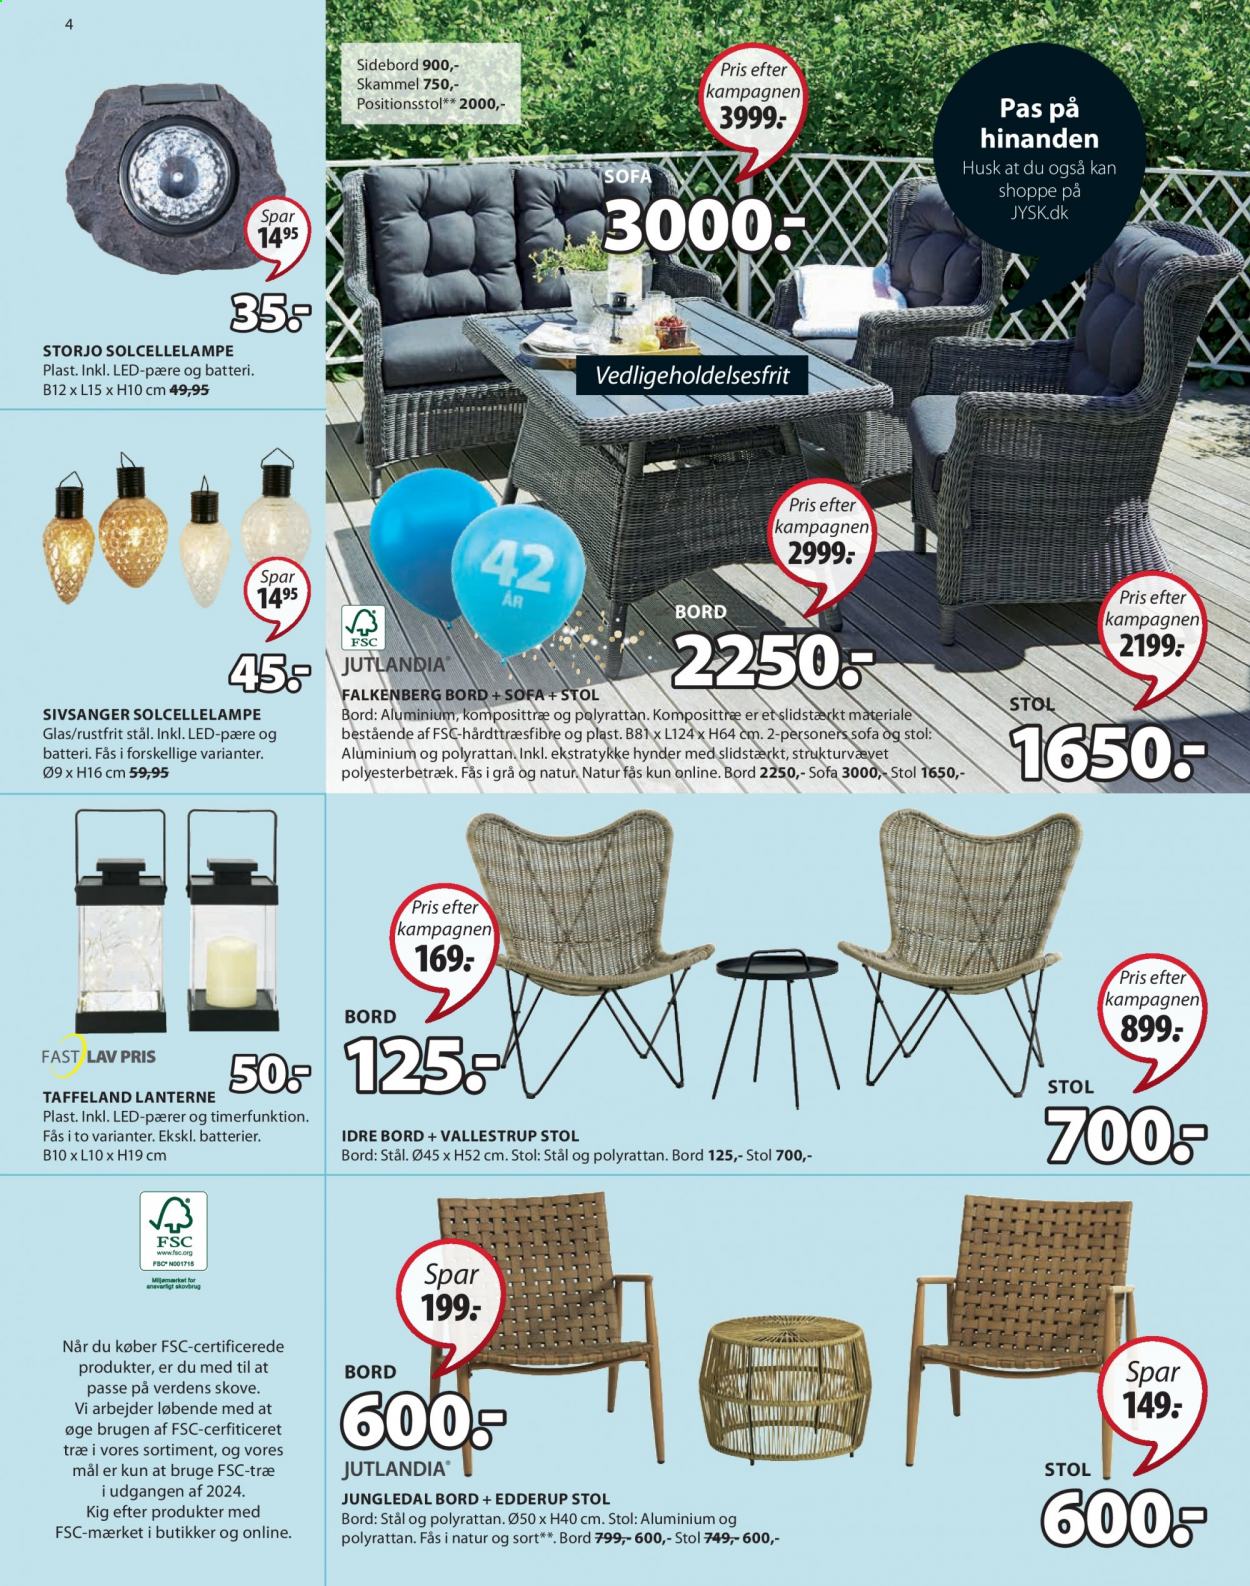 thumbnail - JYSK tilbud  - 9.4.2021 - 18.4.2021 - tilbudsprodukter - glas, bord, stol, sofa, solcellelampe. Side 4.